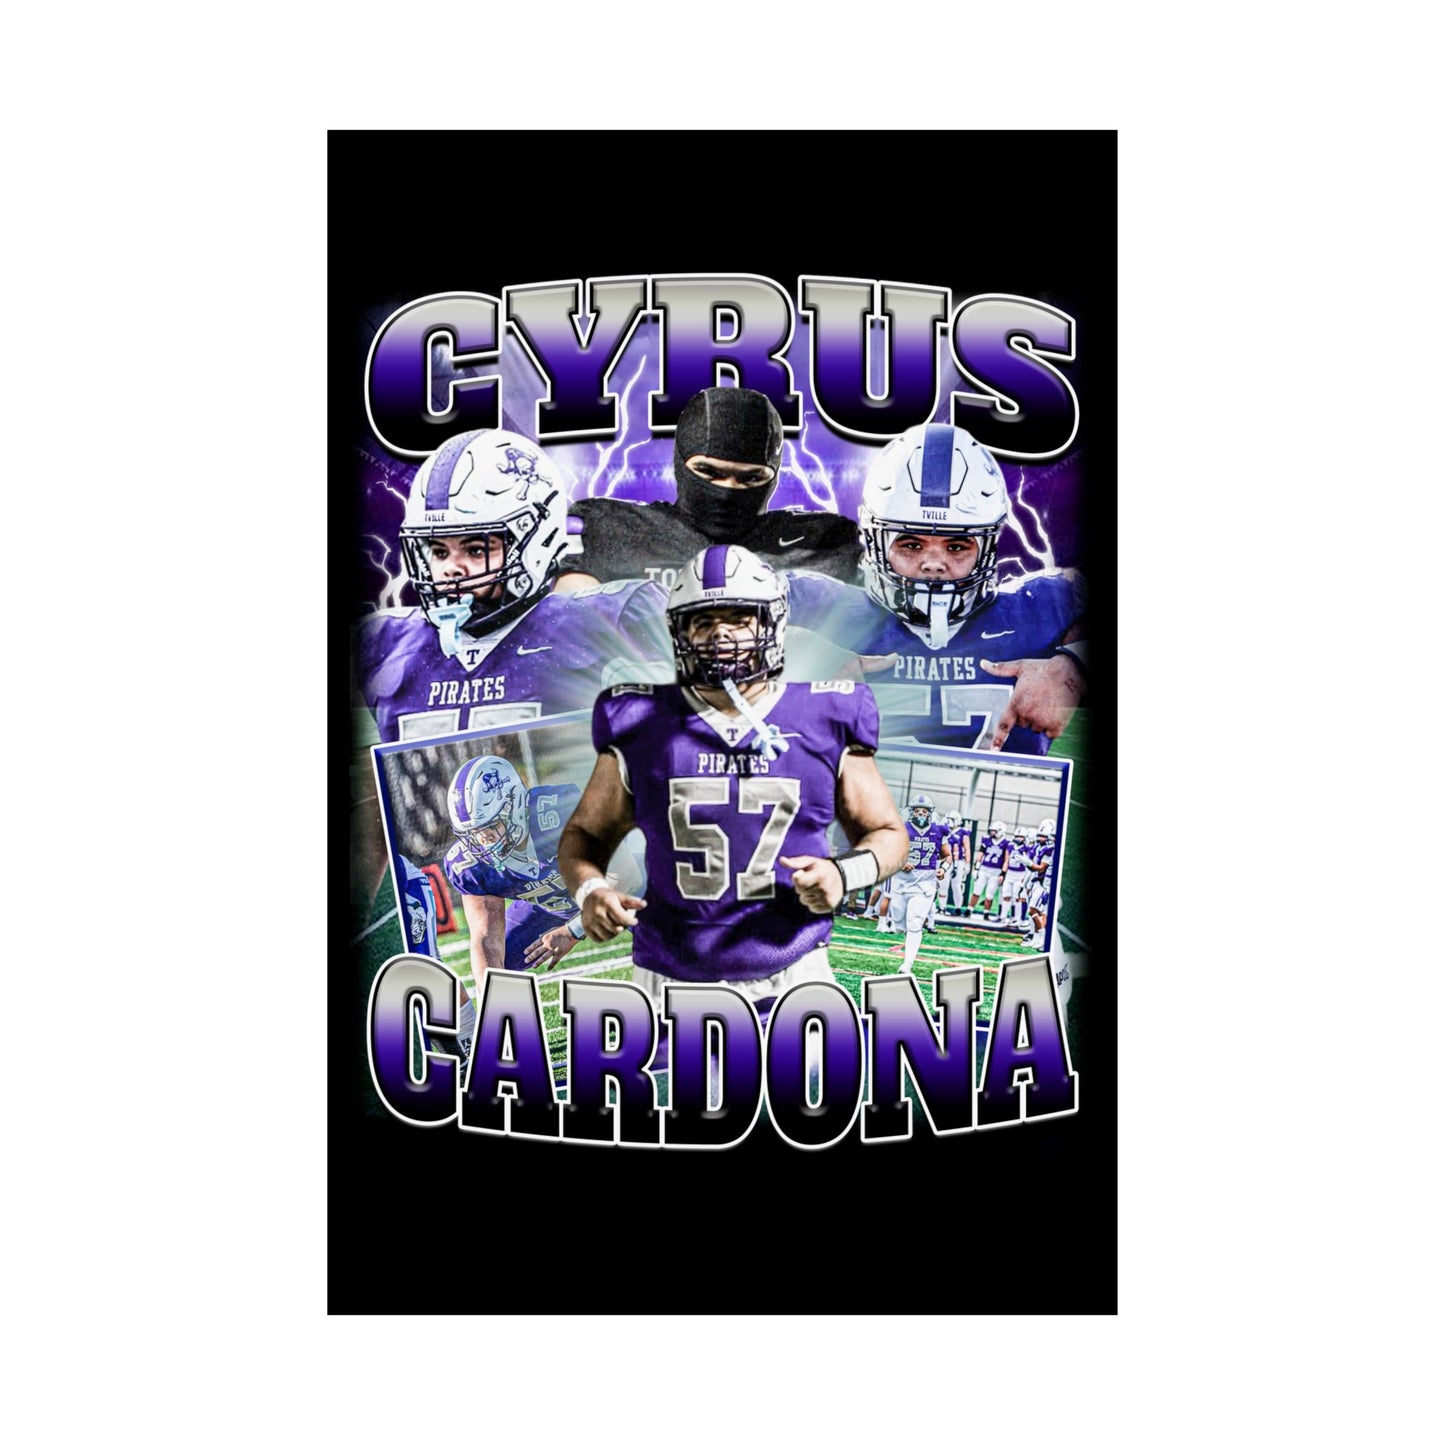 Cyrus Cardona Poster 24" x 36"